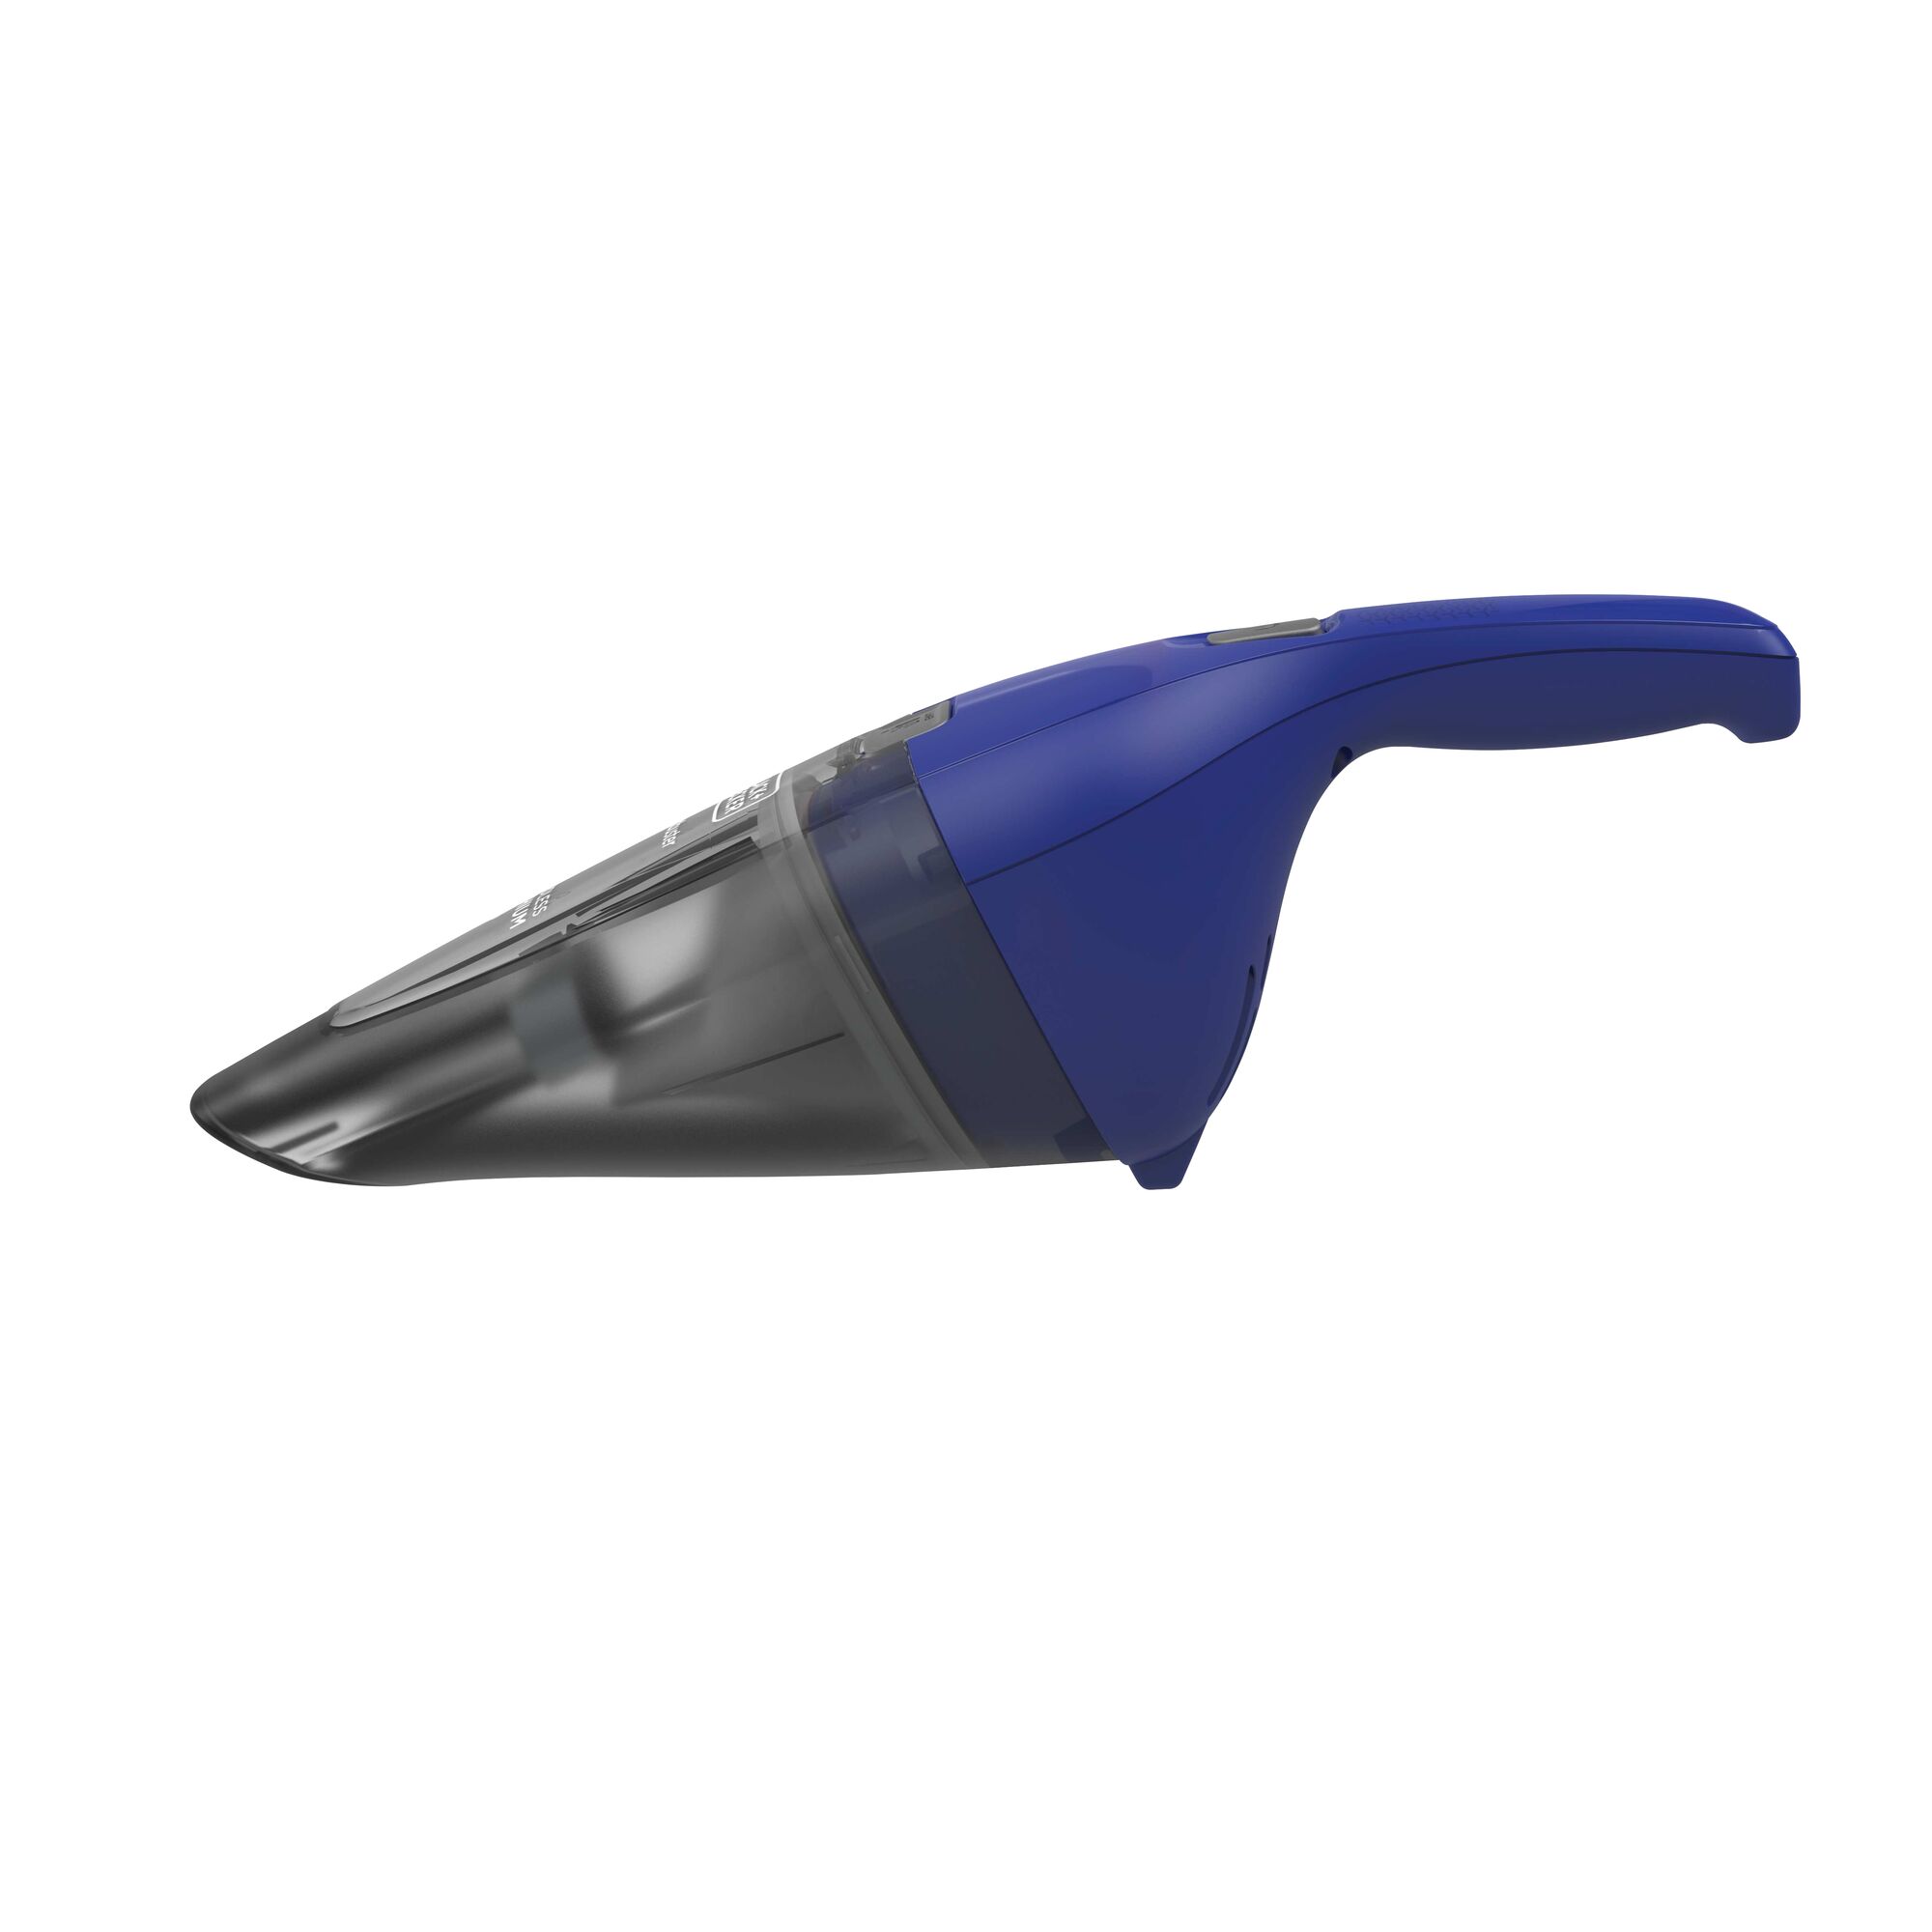 Profile of Dustbuster Quick Clean Cordless Handheld Vacuum.